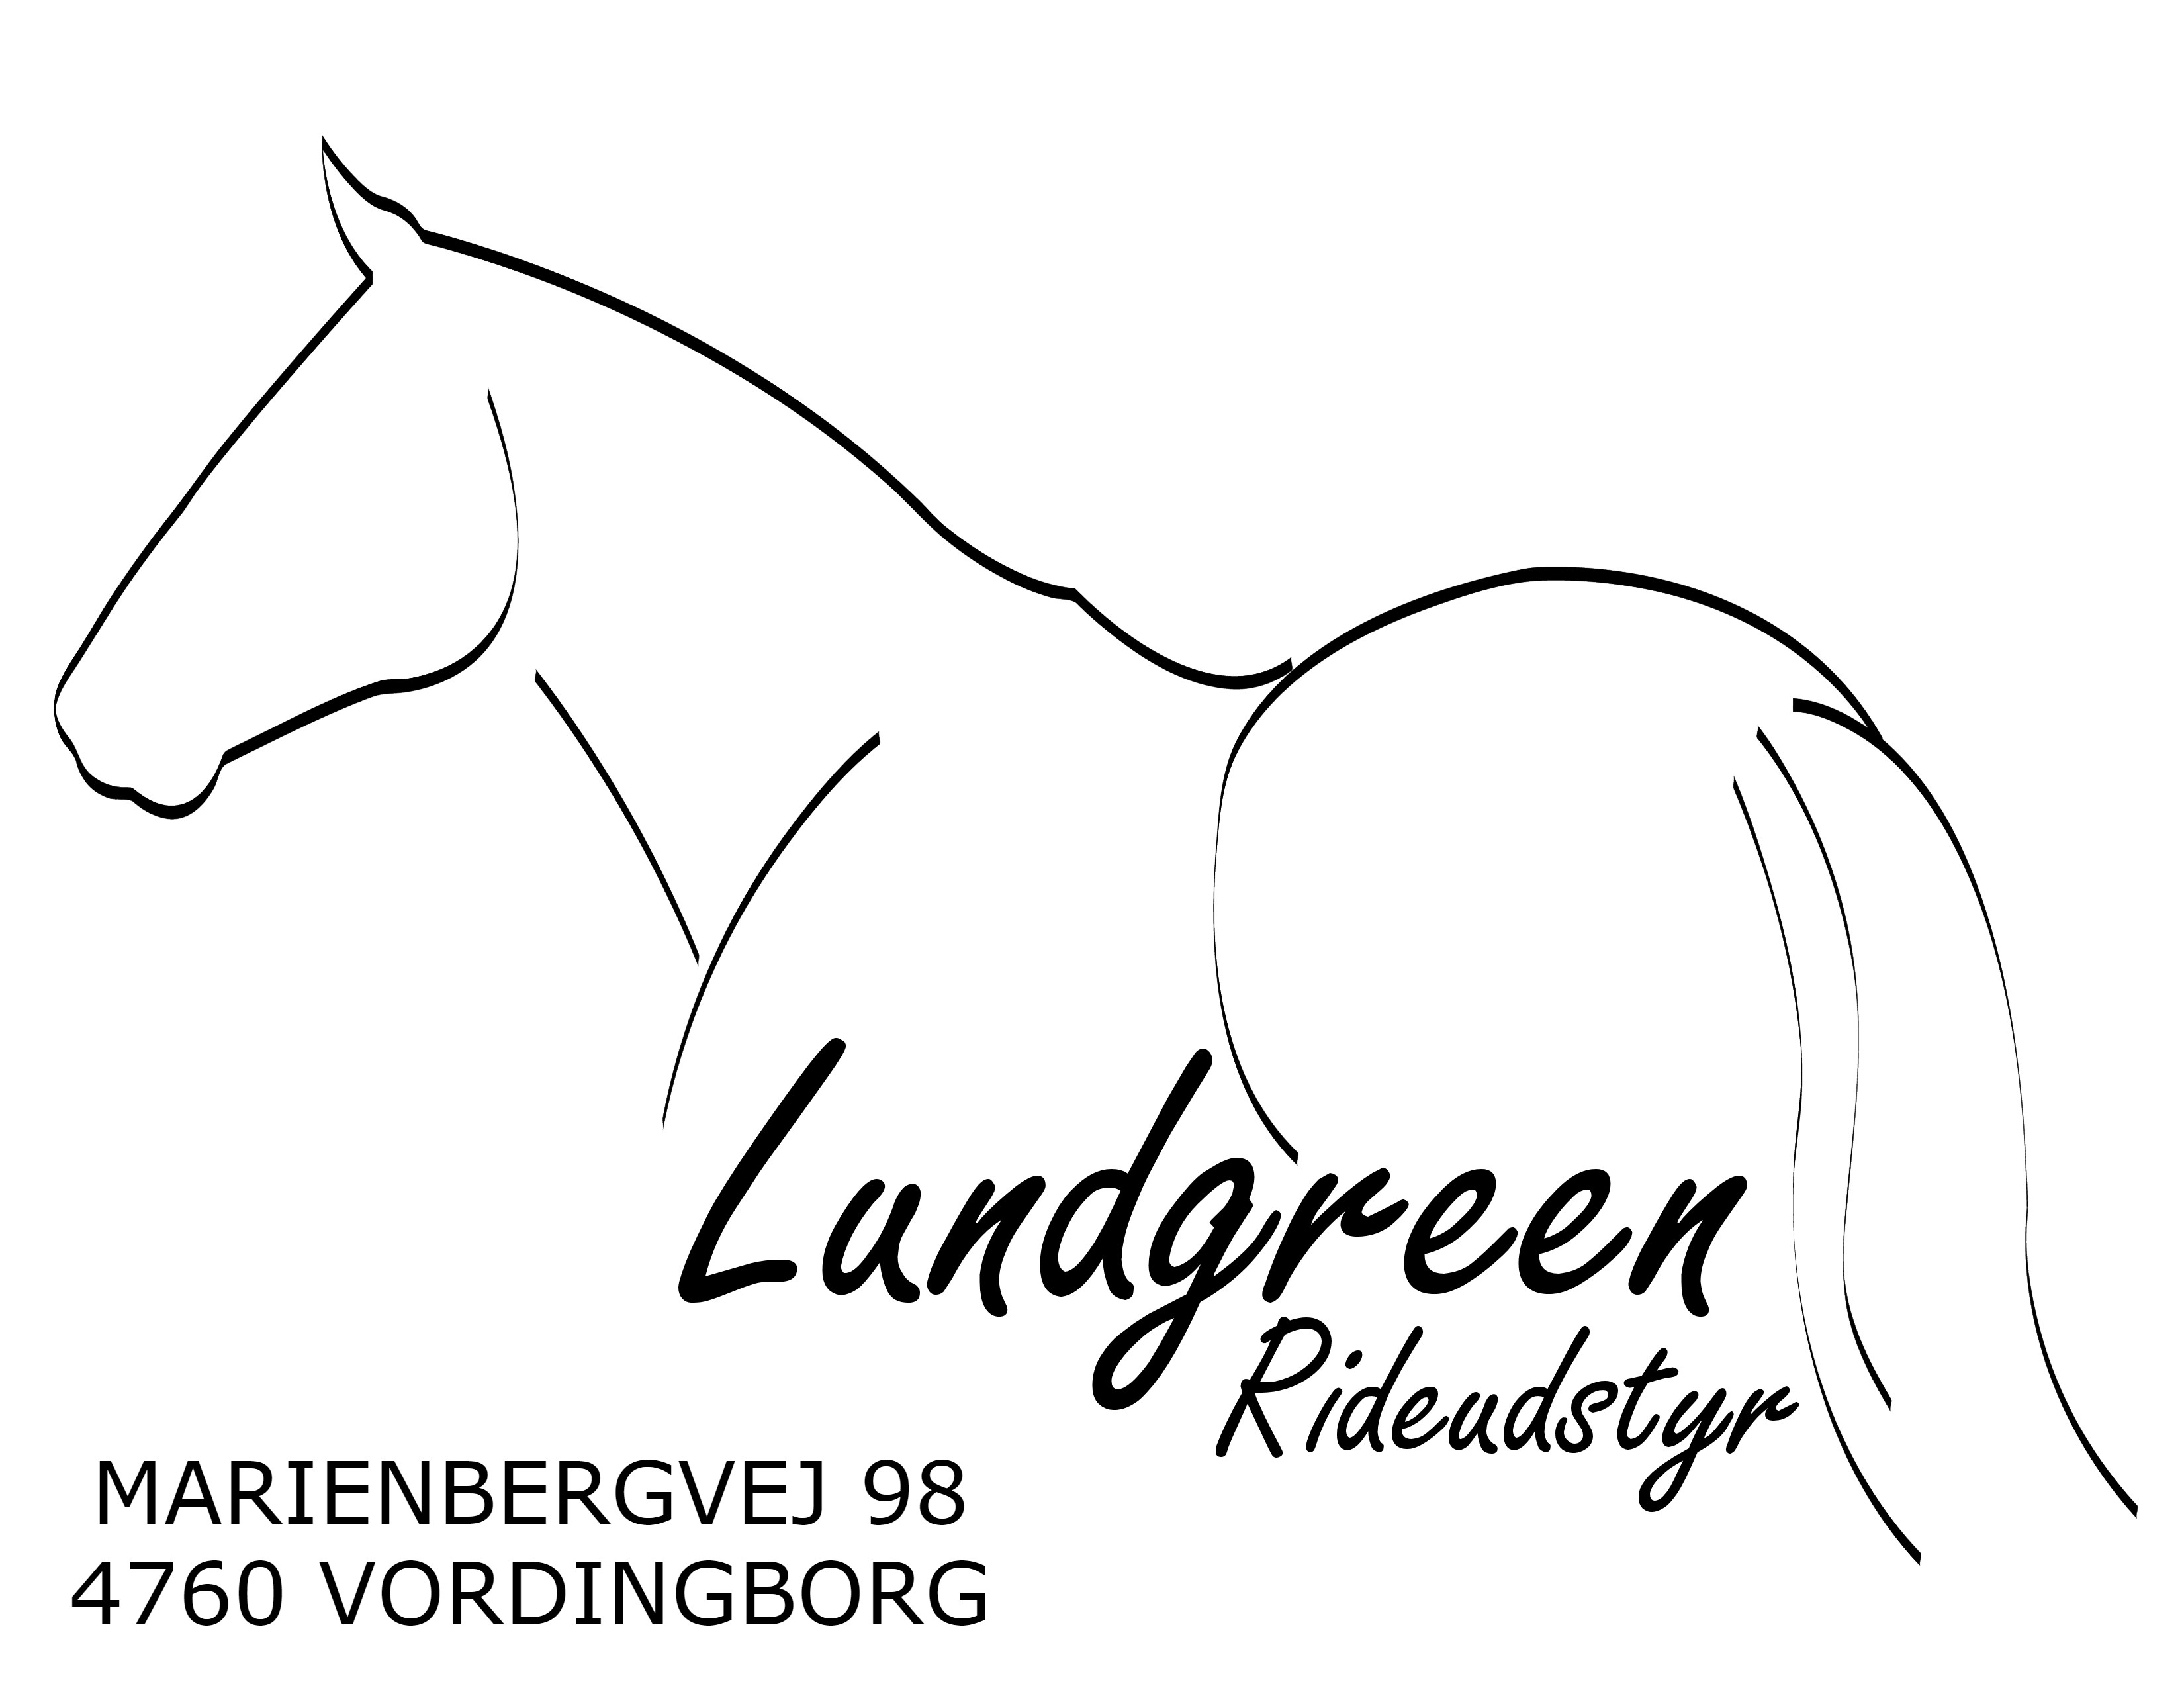 Lundgreen Rideudstyr